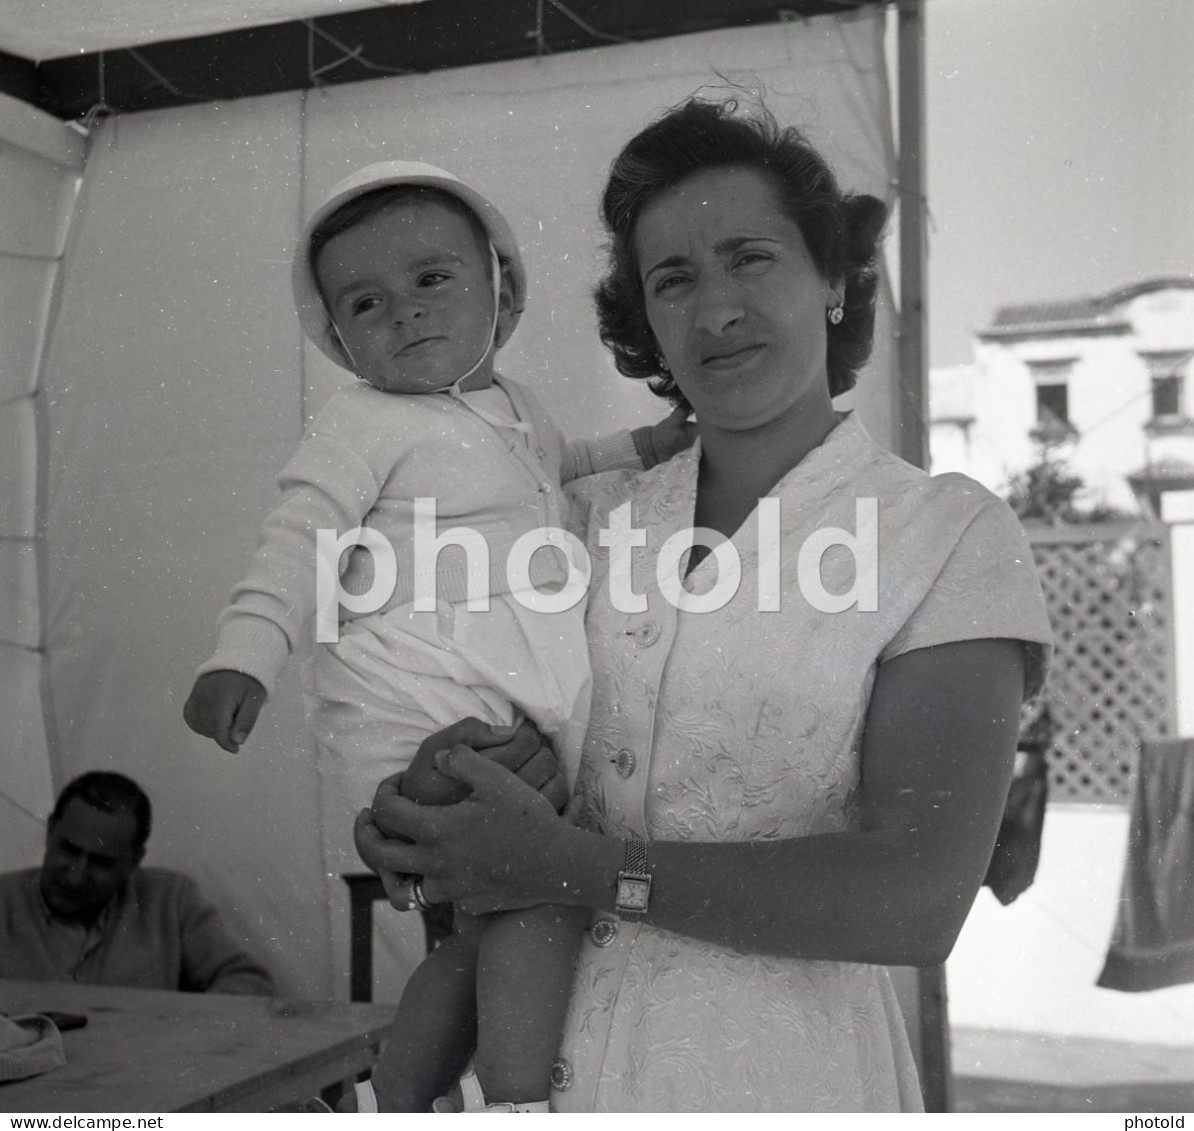 20 NEGATIVES SET 1960s WOMAN FEMME BOY GIRL BABY PORTUGAL AMATEUR 60mm NEGATIVE NOT PHOTO FOTO